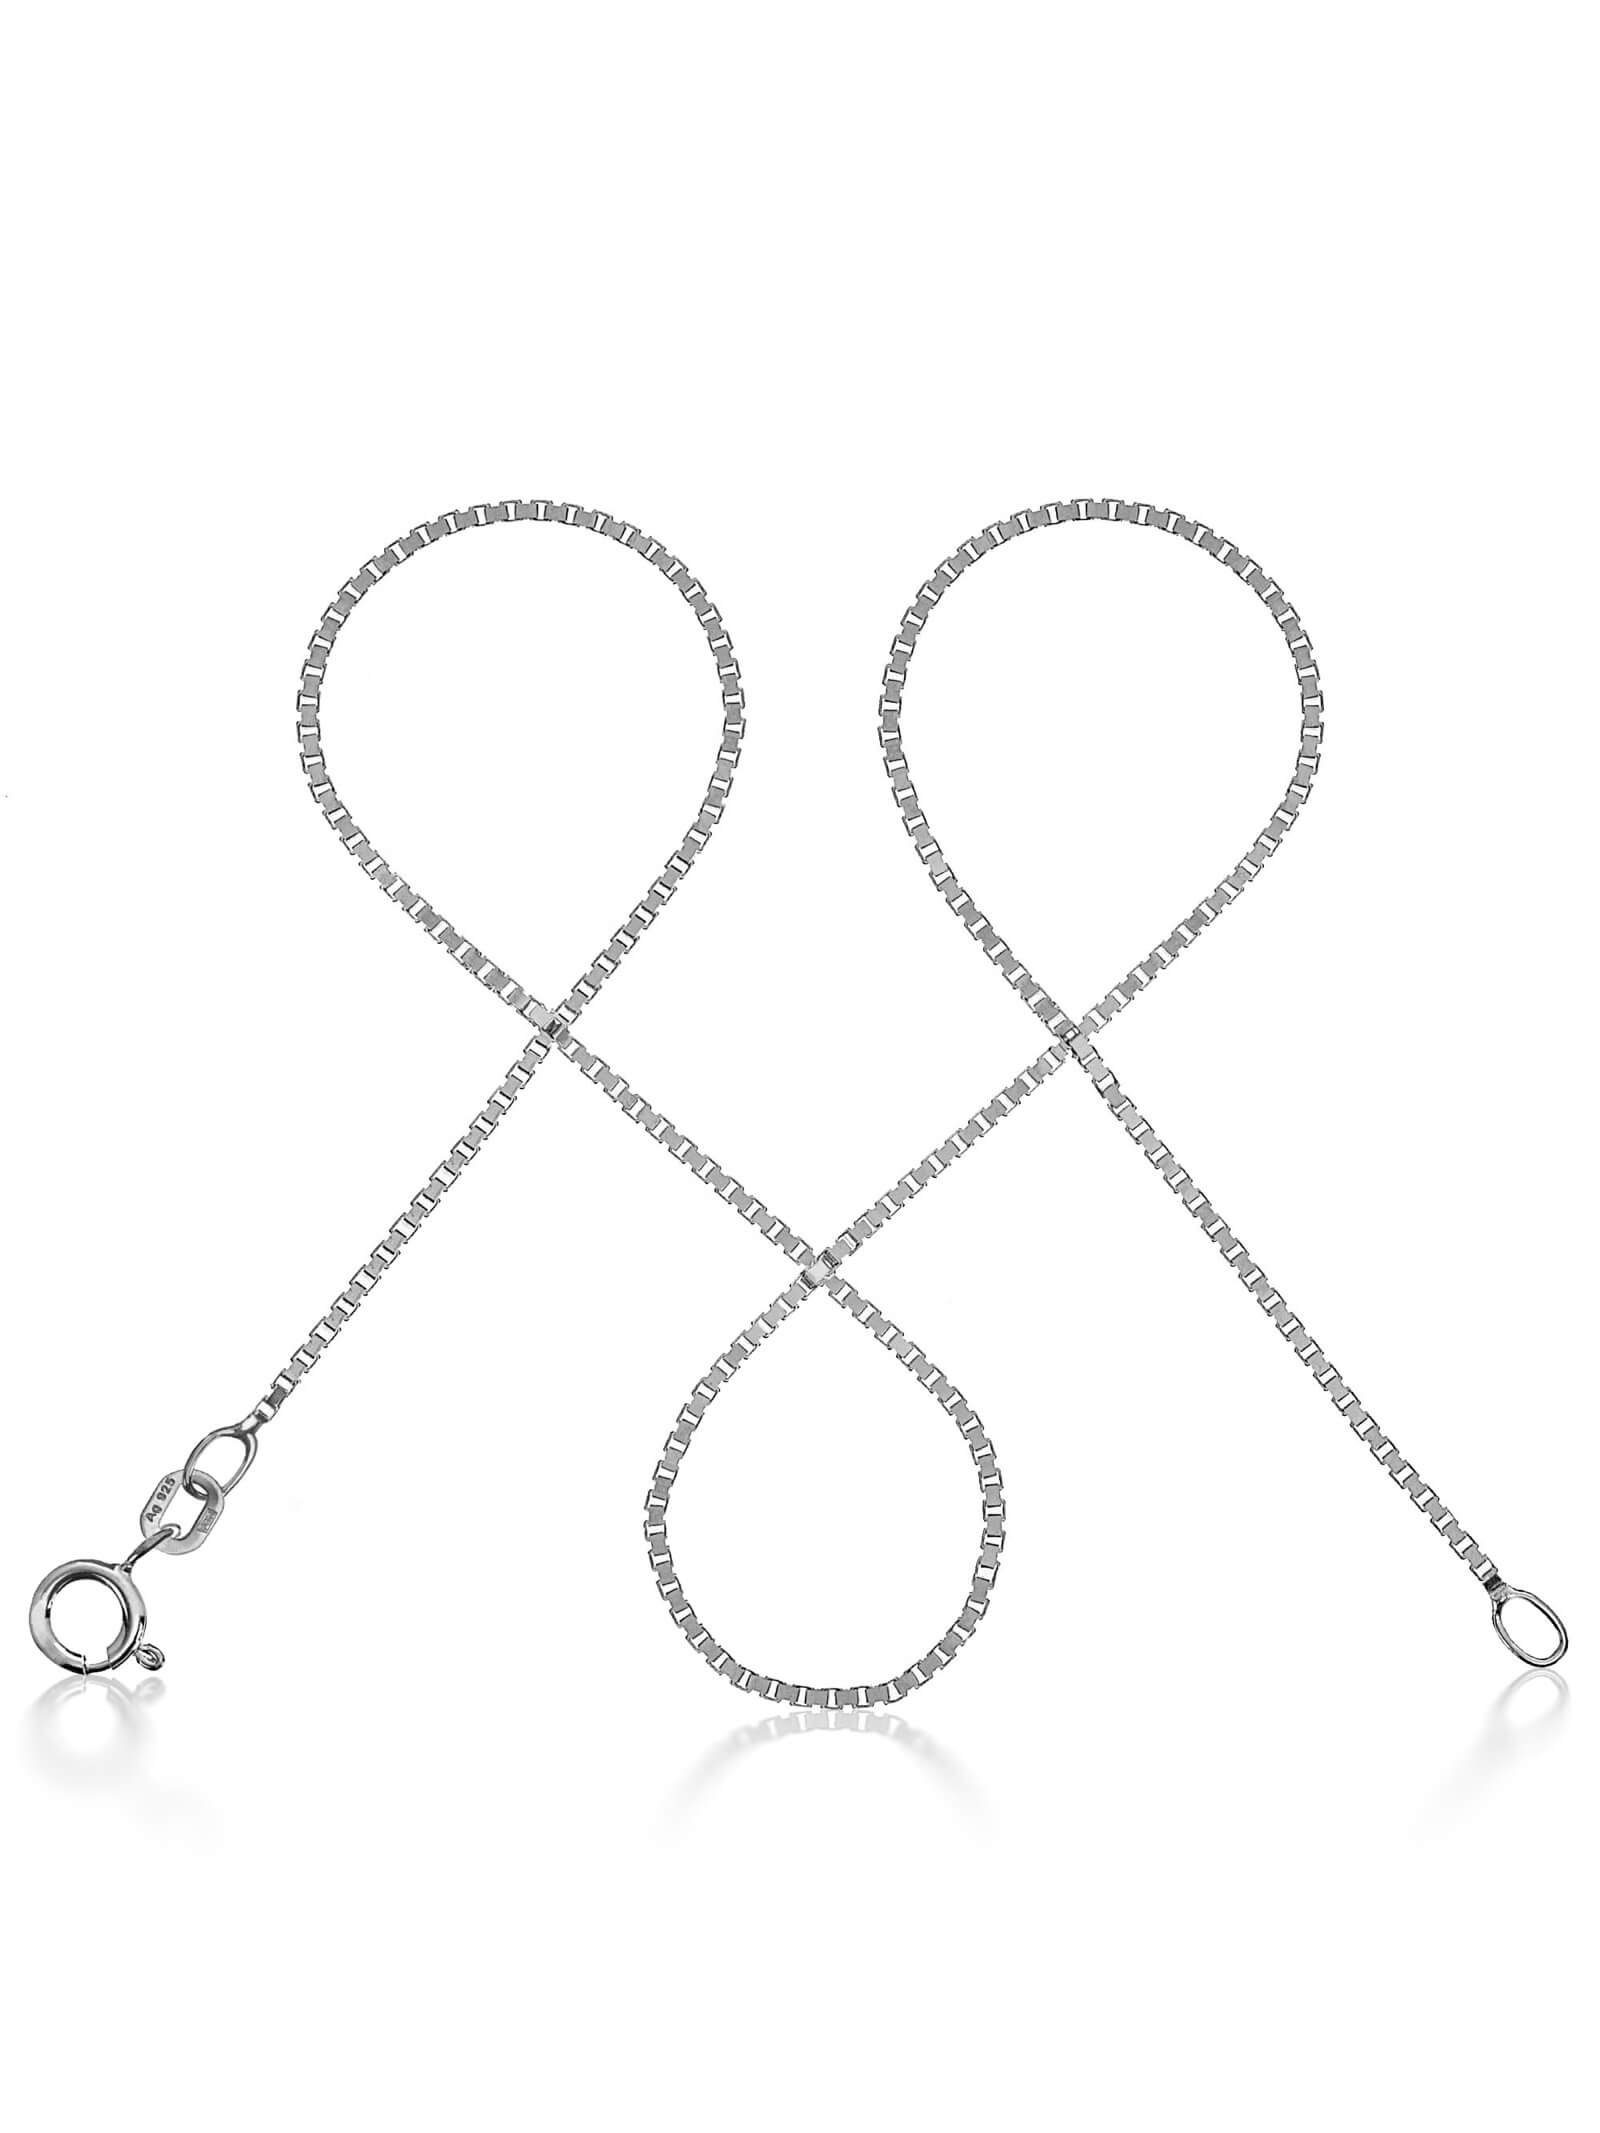 modabilé Kette ohne Anhänger Halskette VENICE, Damen Venezianerkette 1,2mm  38cm, Sterling Silber 925, Made in Germany